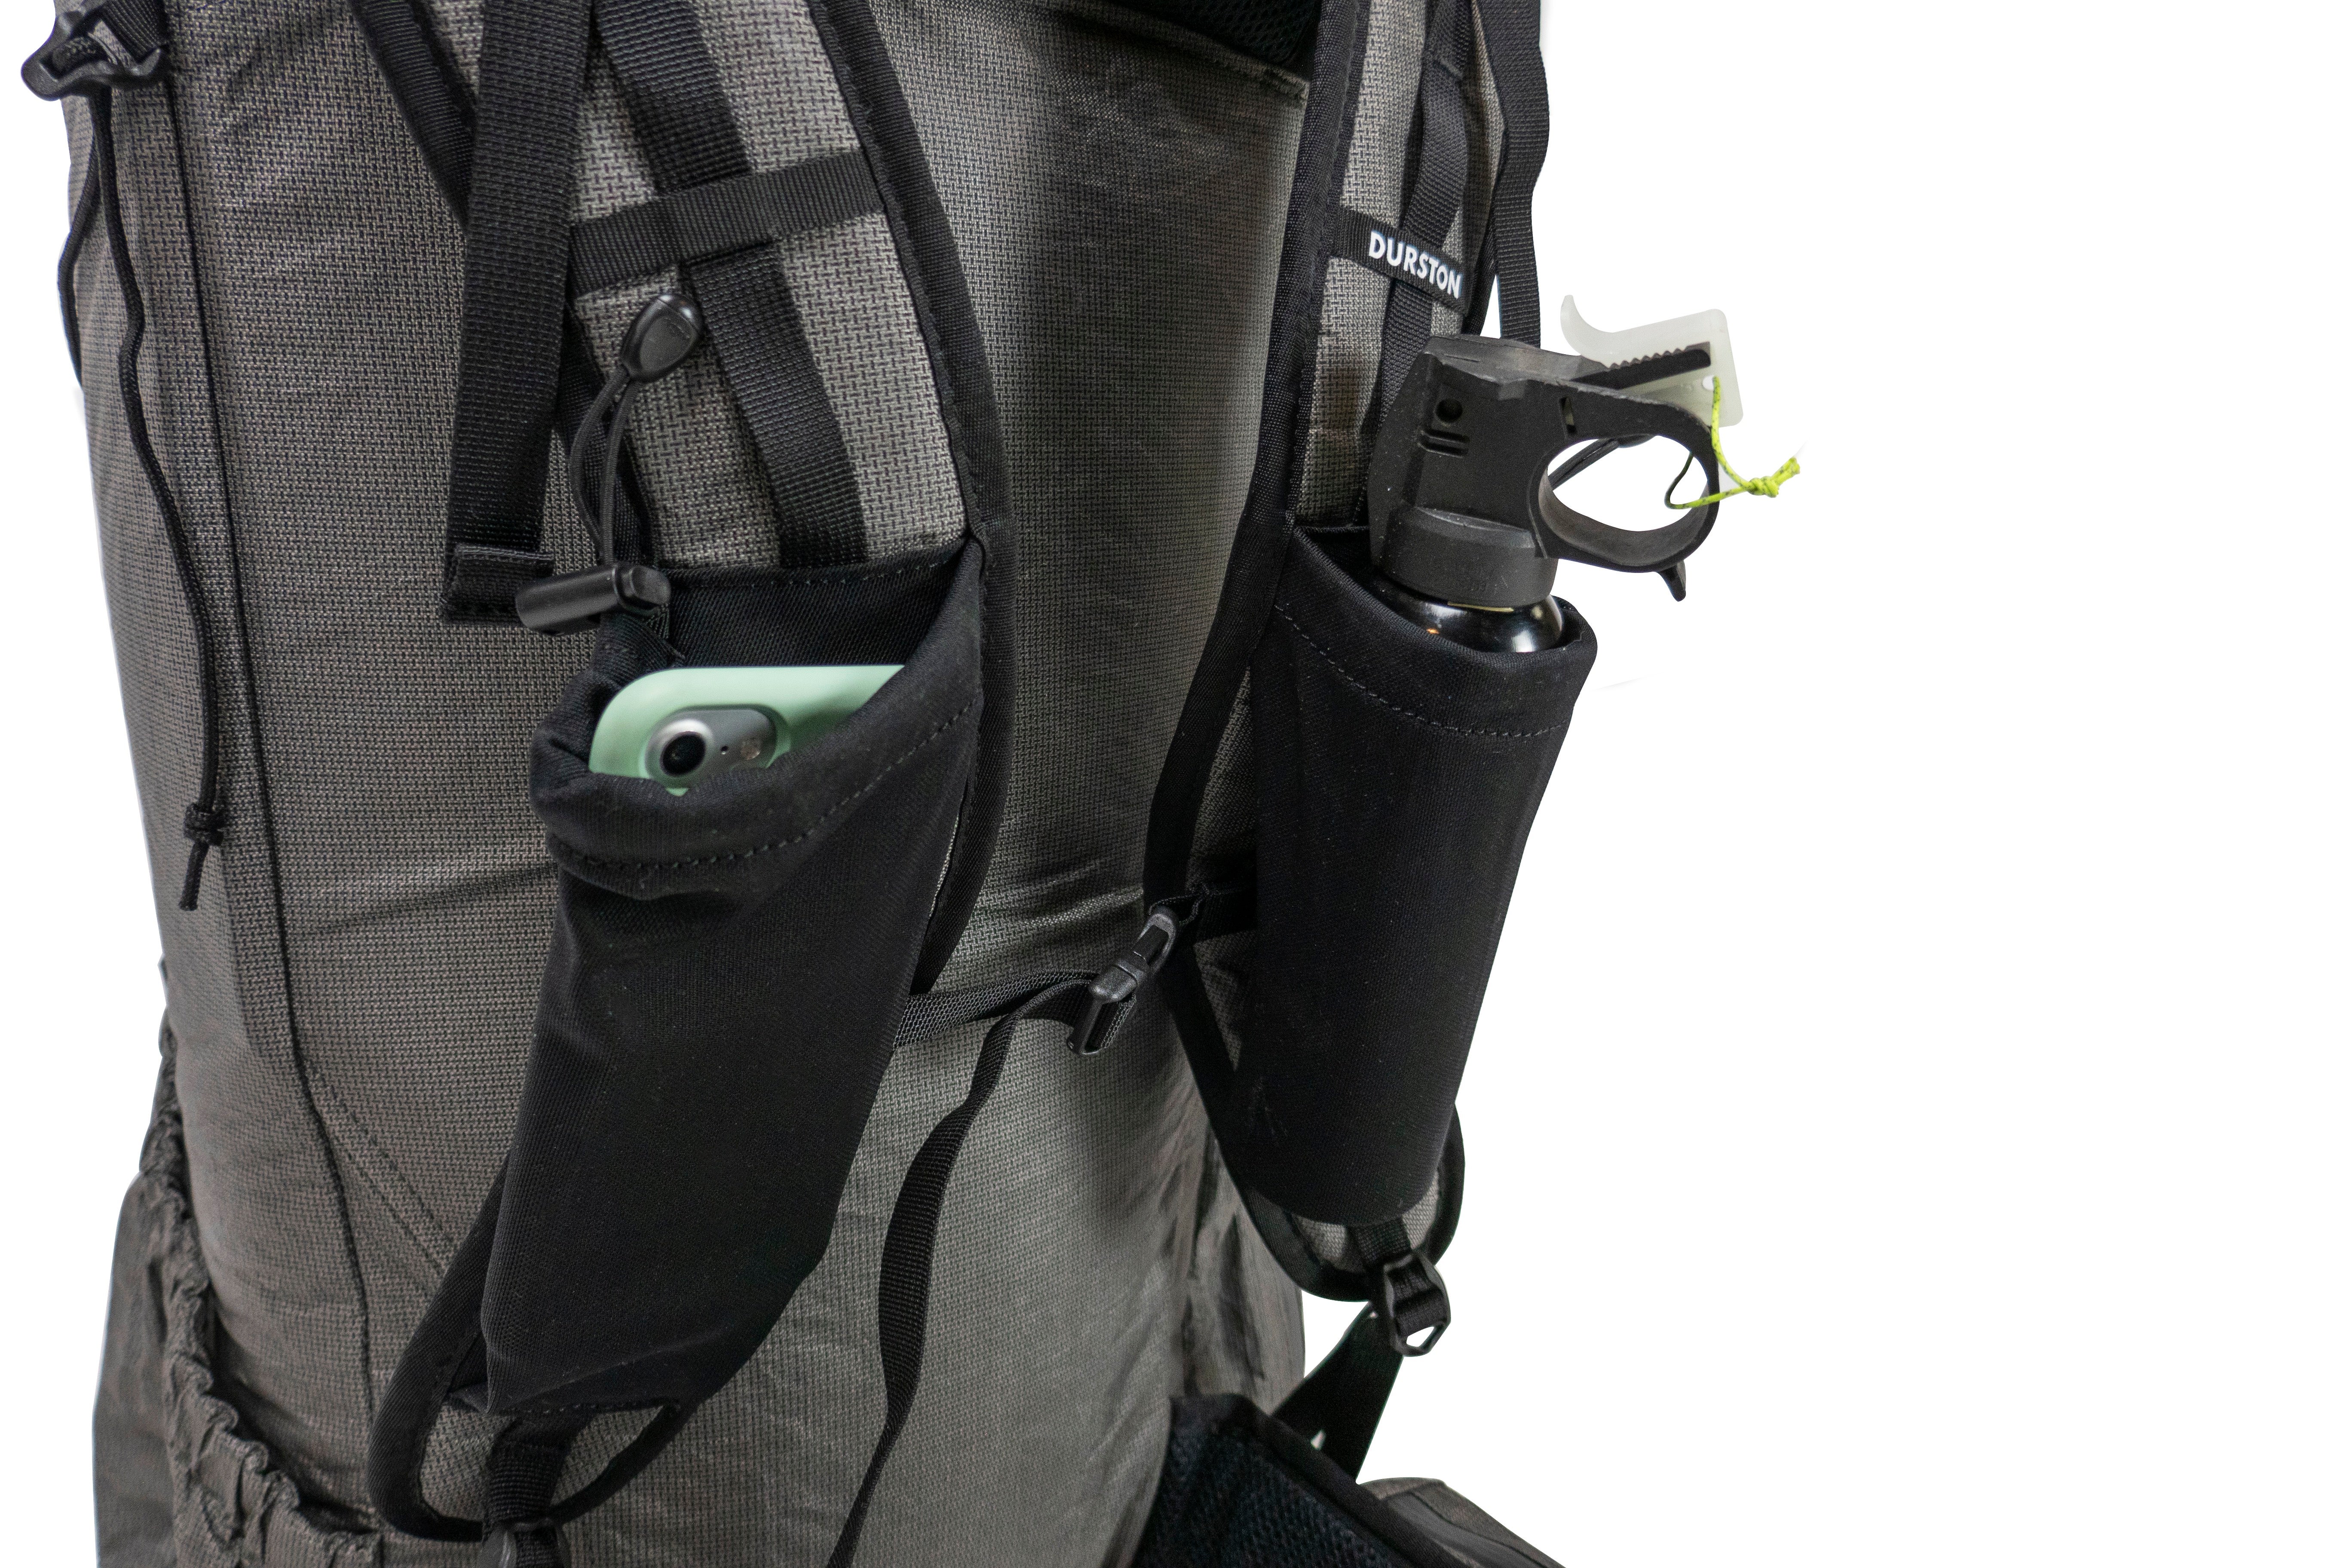 DURSTONGEAR Dan Durston Gear Kakwa 40 Ultralight Backpack shoulder strap shoulder pocket class load UHMWPE high-tenacity polyester